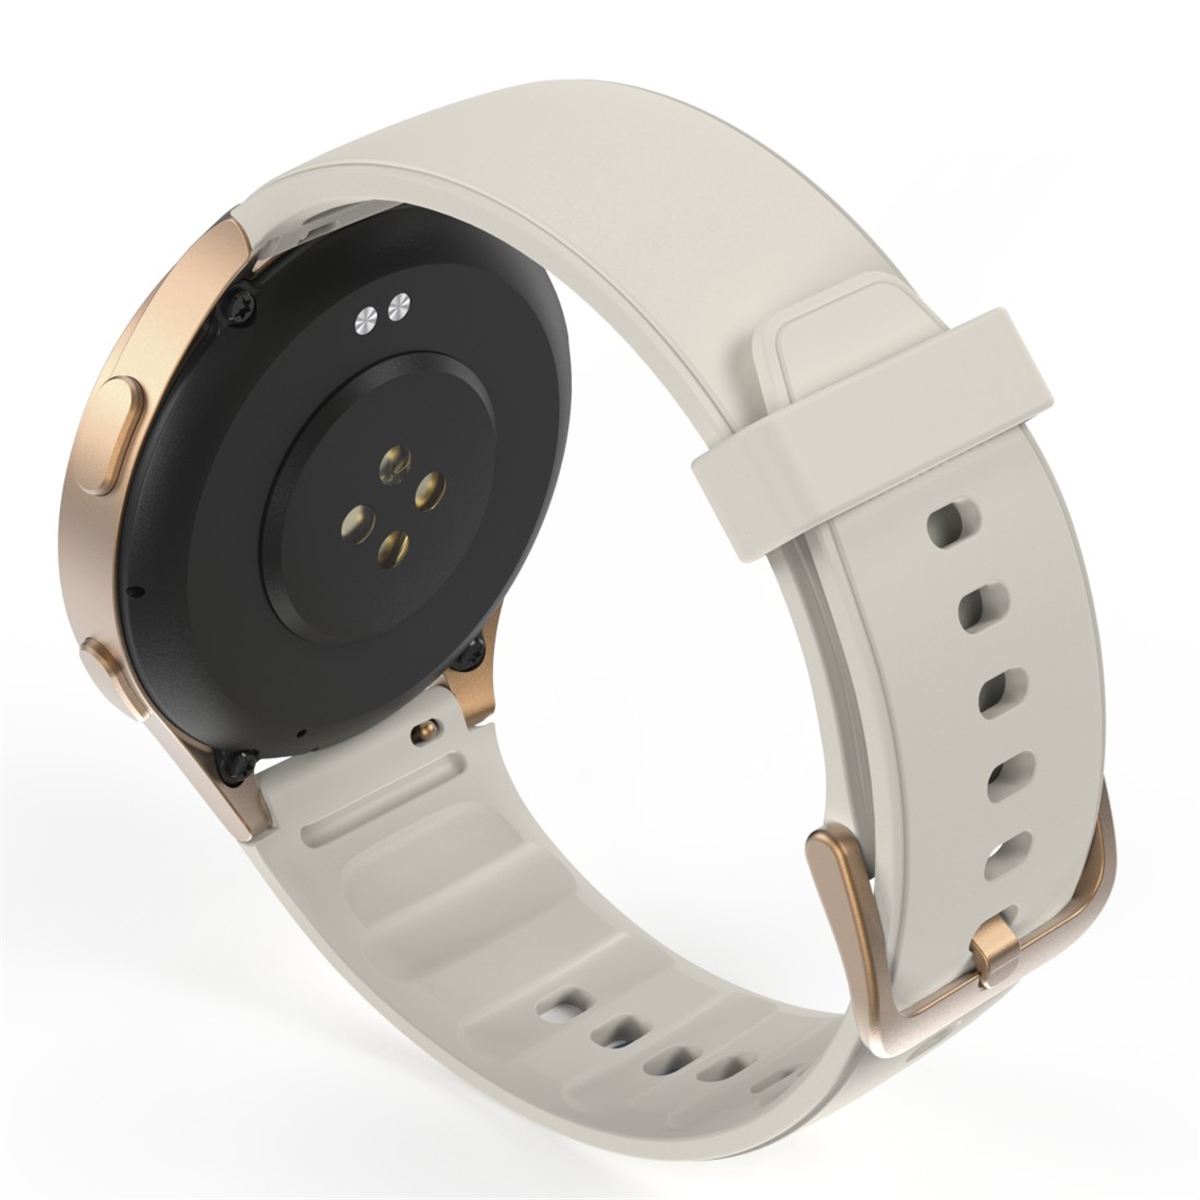 Telefonfunktion AMOLED Hama 8900 Display Gold Smartwatch Bluetooth 1,32“ | eBay mit